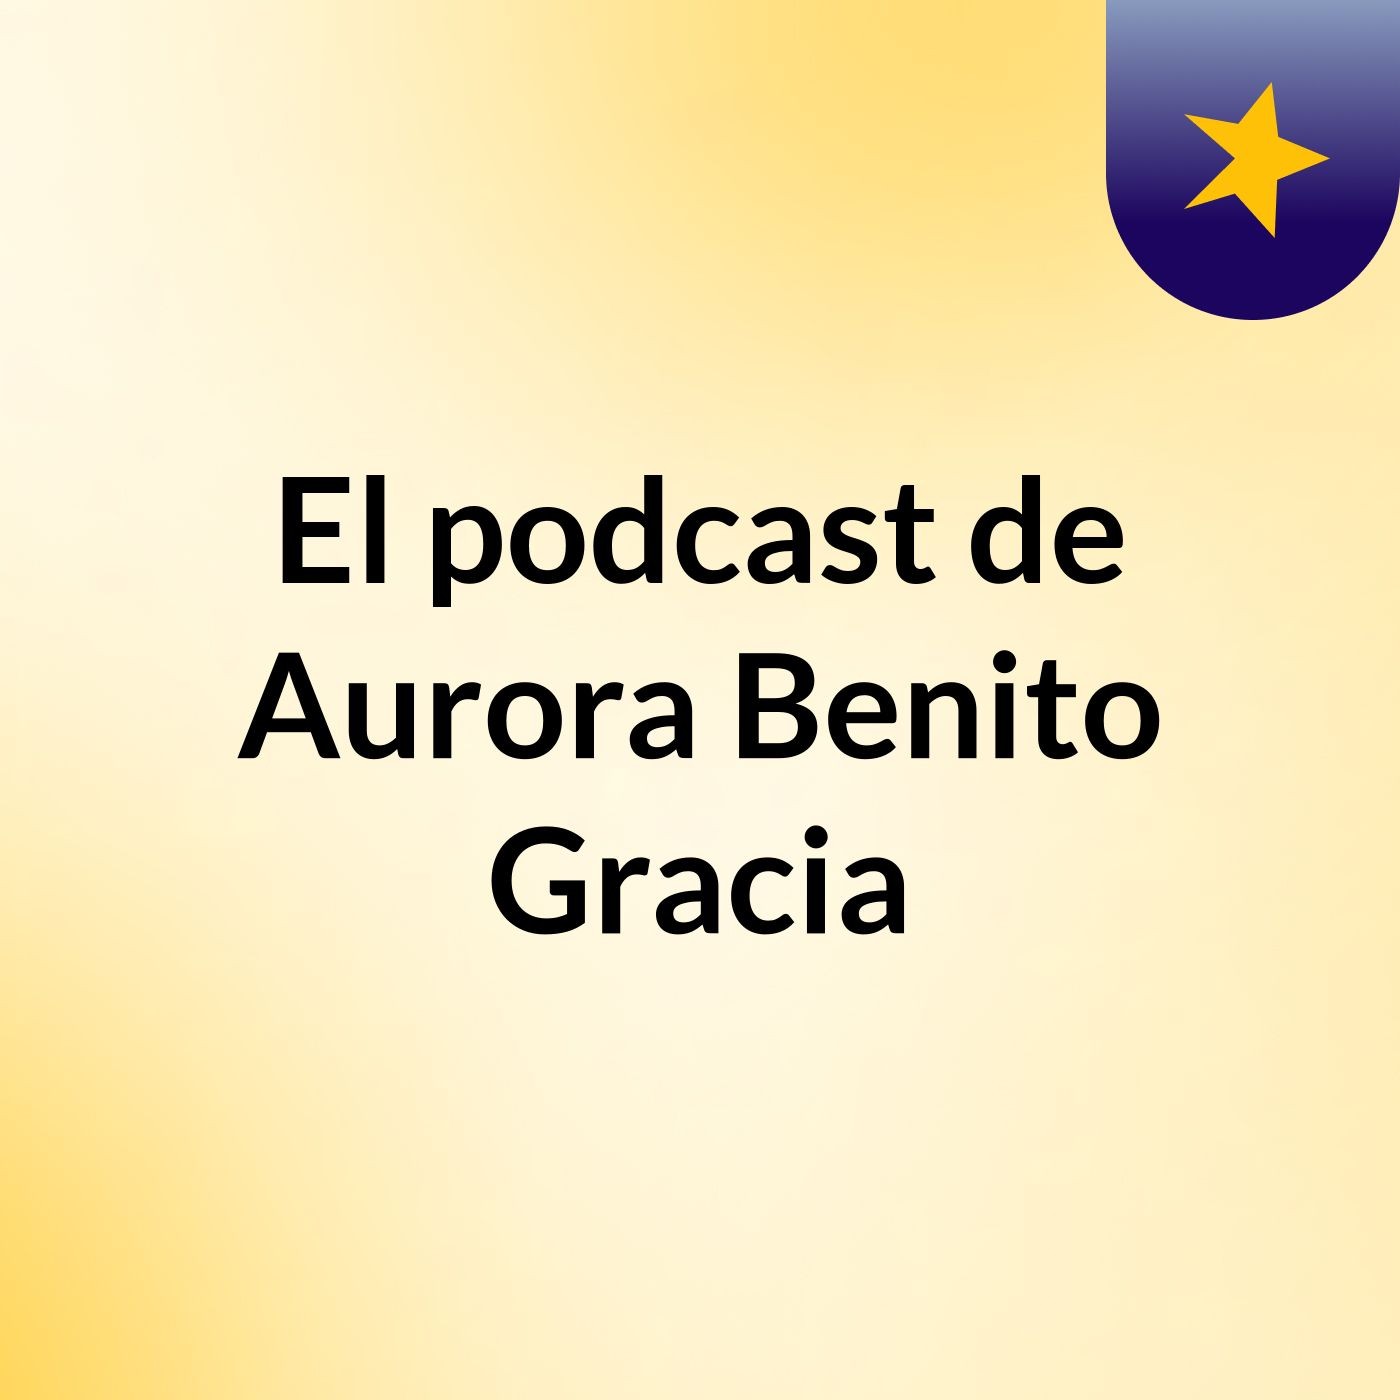 El podcast de Aurora Benito Gracia